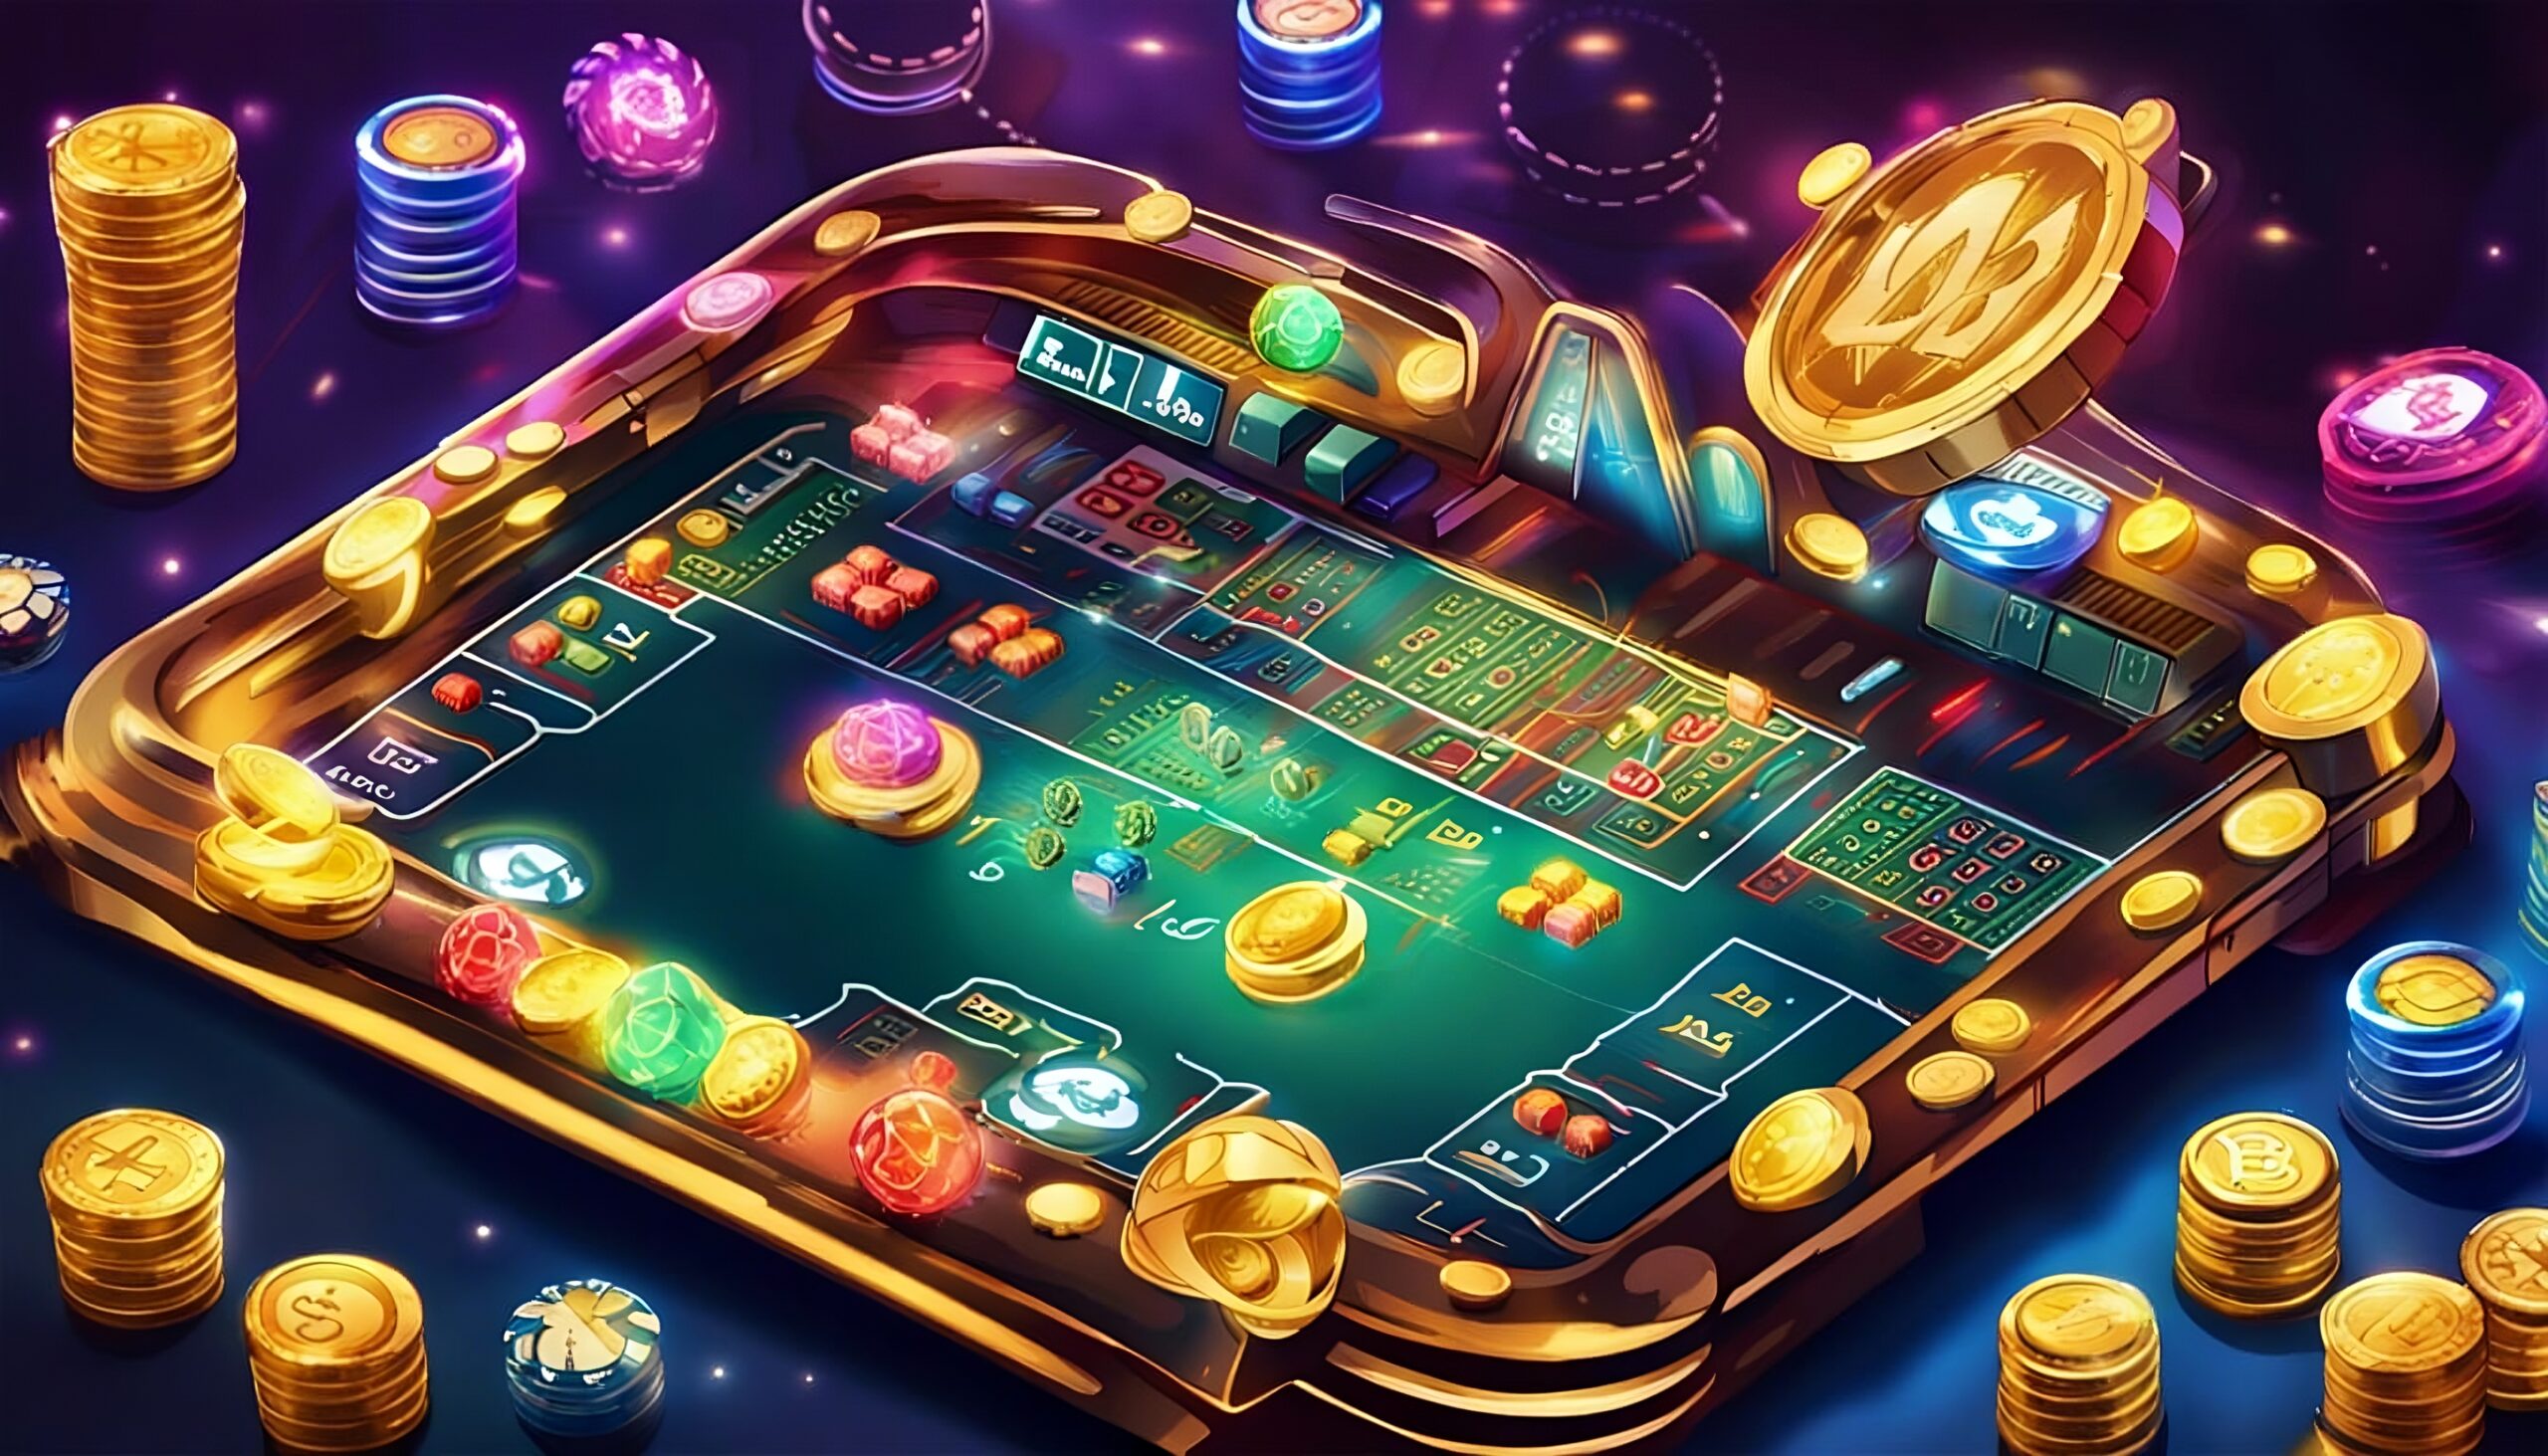 bitcoin online casino game Strategies: Maximizing Wins and Minimizing Losses